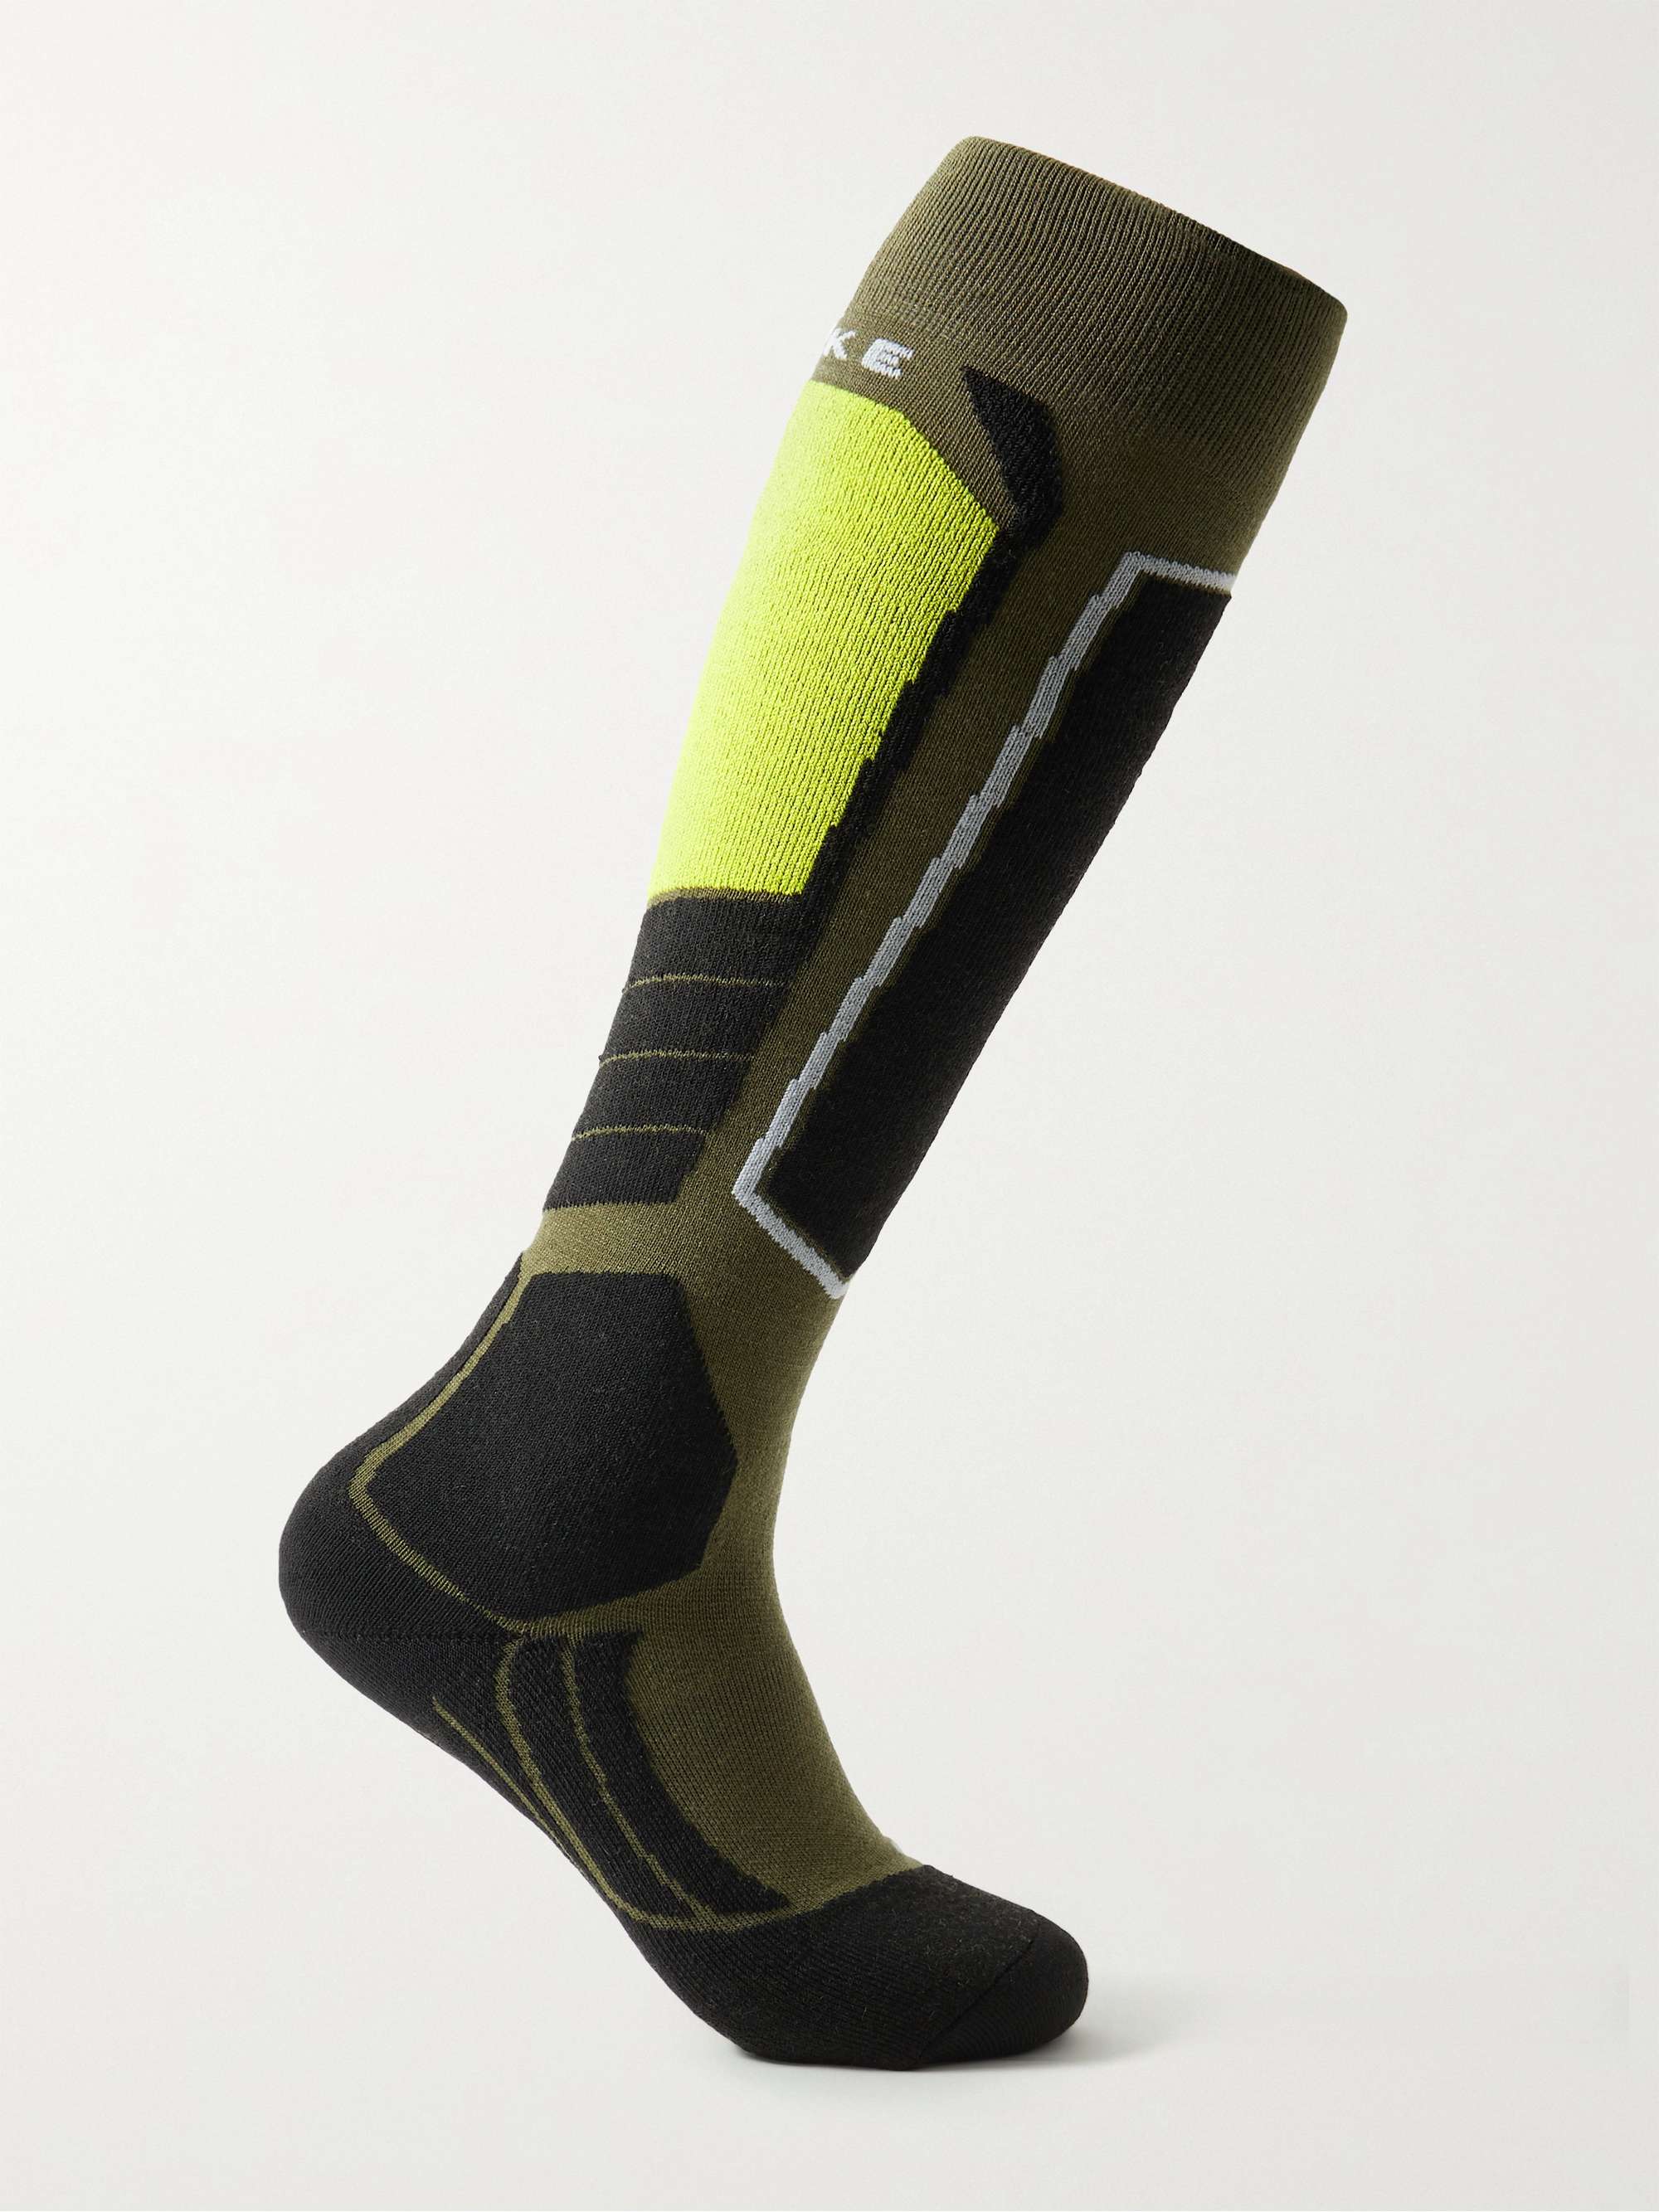 FALKE ERGONOMIC SPORT SYSTEM SK2 Stretch-Knit Ski Socks